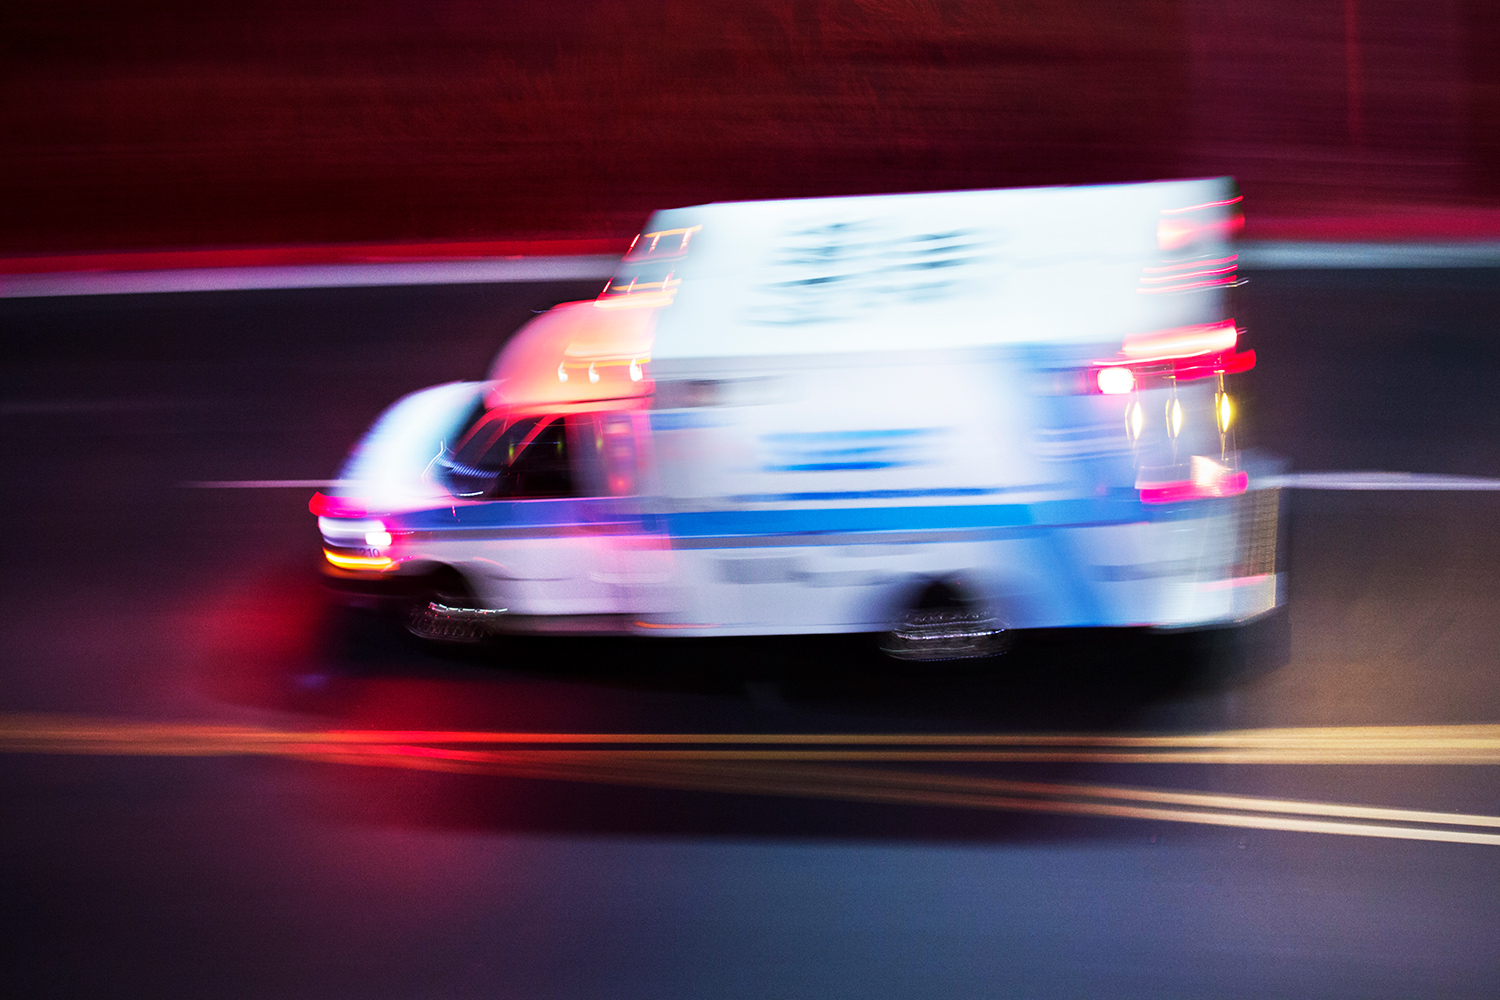 Blurry Ambulance on the road